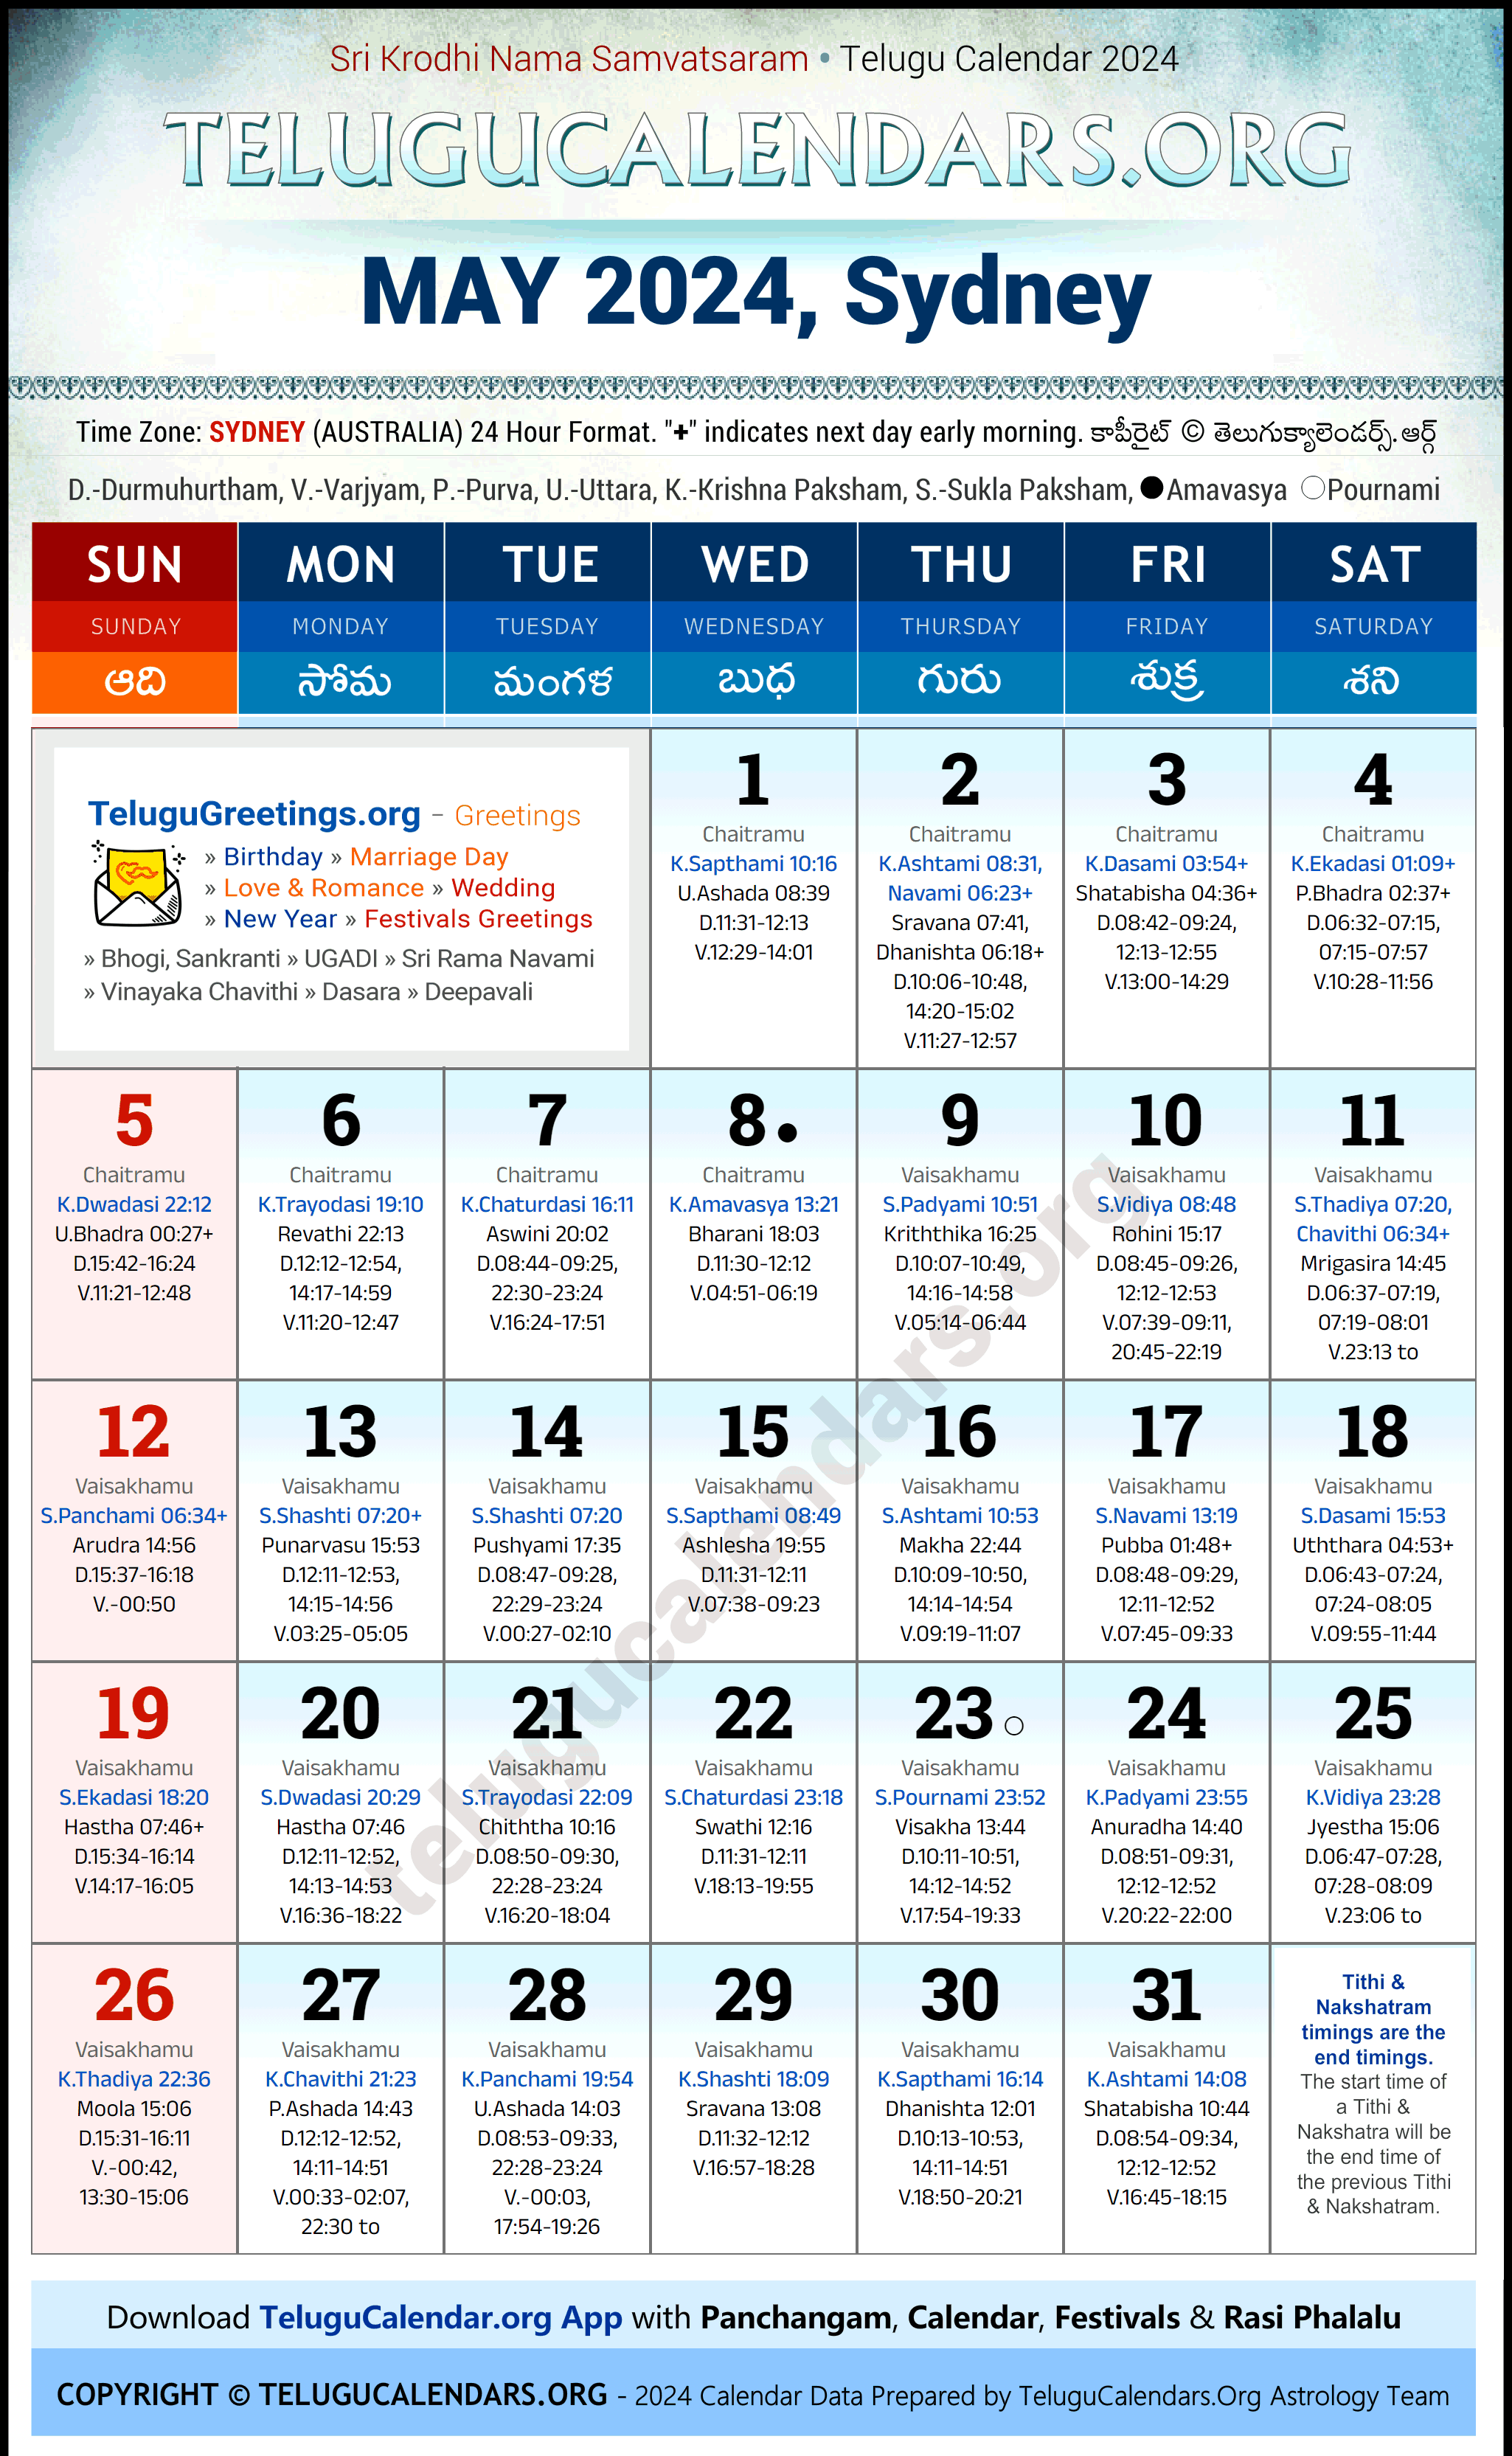 Telugu Calendar 2024 May Festivals for Sydney